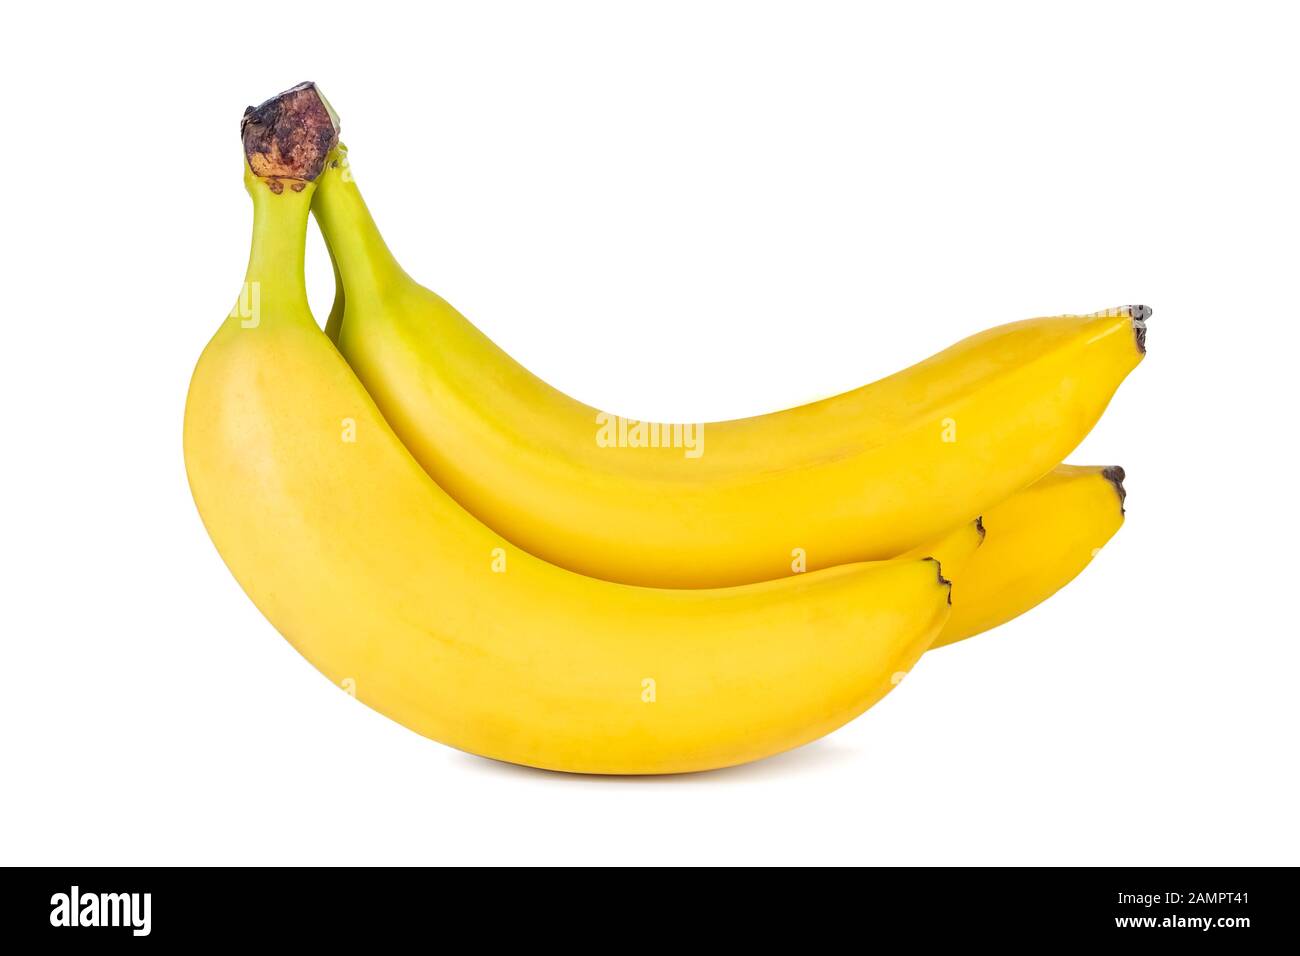 https://c8.alamy.com/comp/2AMPT41/banana-cluster-isolated-on-white-background-fresh-fruit-2AMPT41.jpg